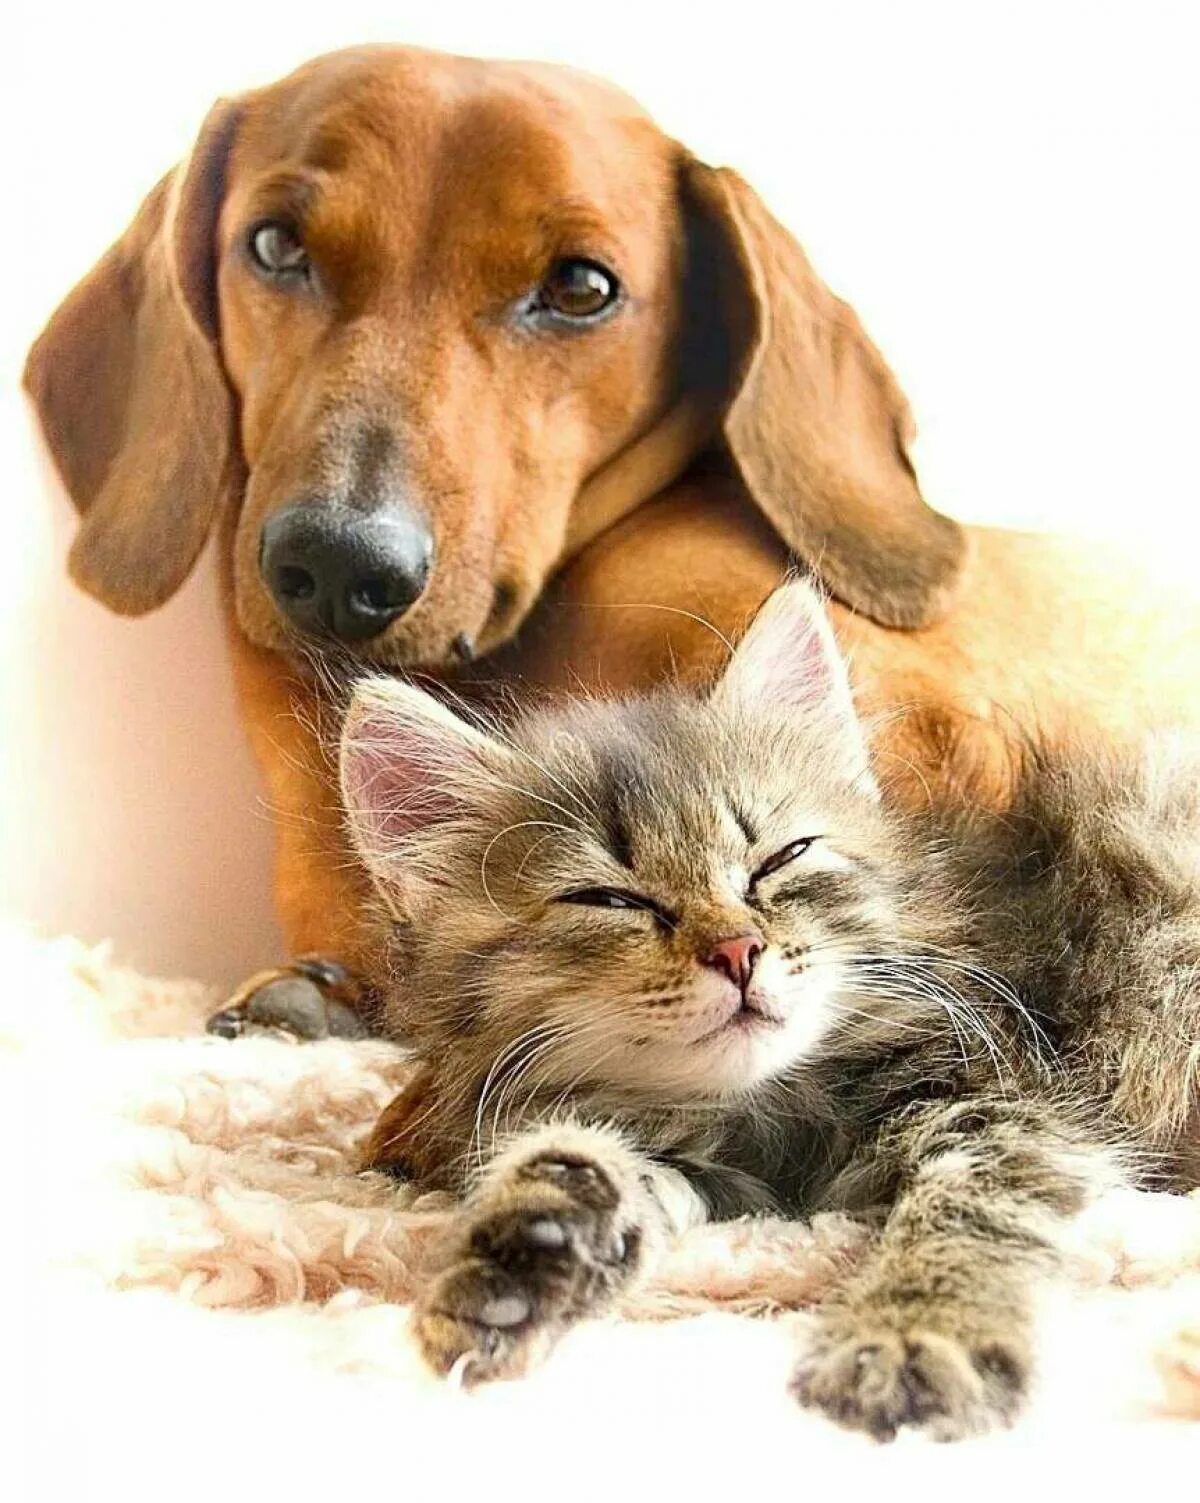 Кошка. Домашний питомец. Собачки и кошечки. Собака и кошка вместе. Животные кошки собаки щенки